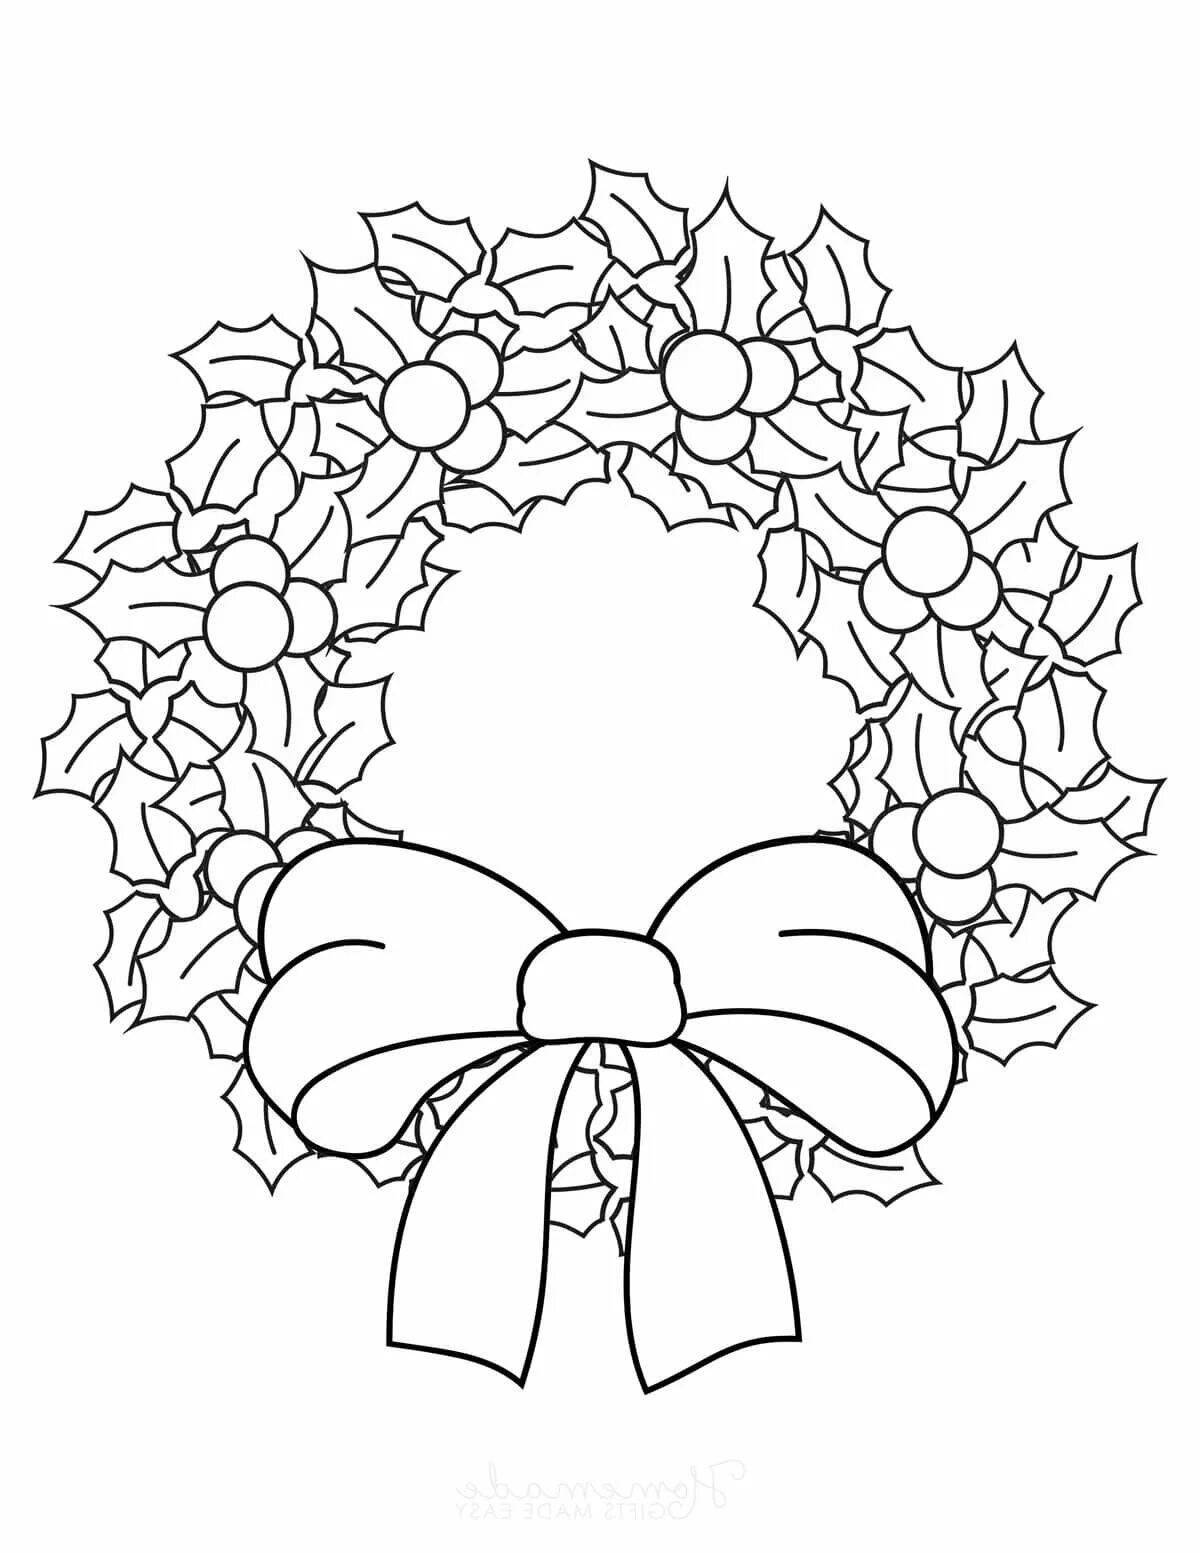 Joyful Christmas wreath coloring book for kids